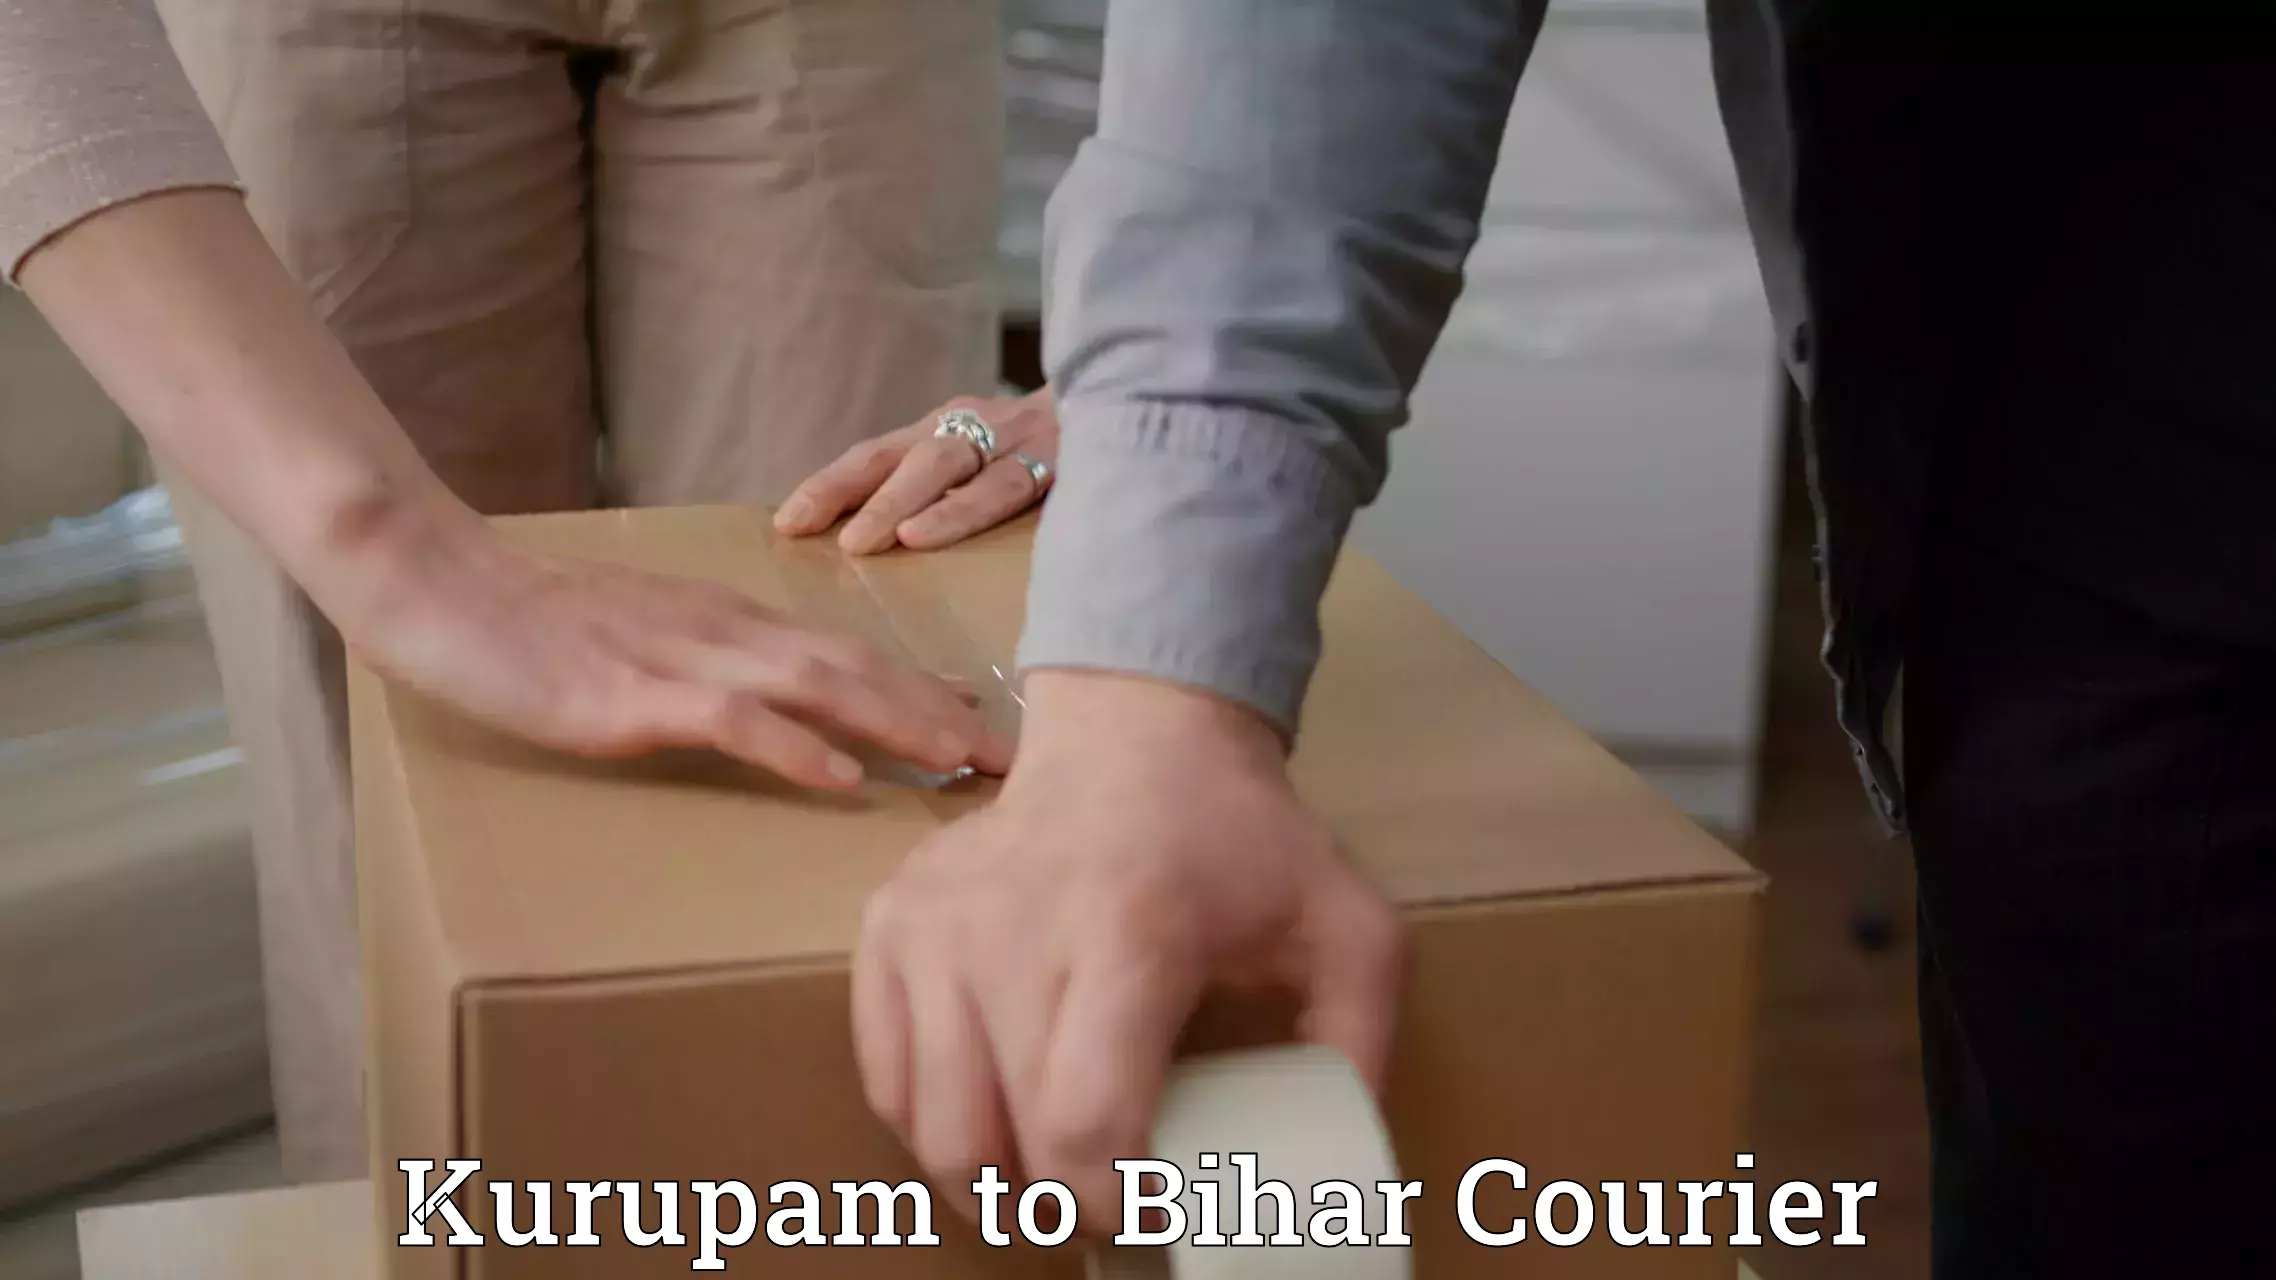 Professional courier services in Kurupam to Muzaffarpur